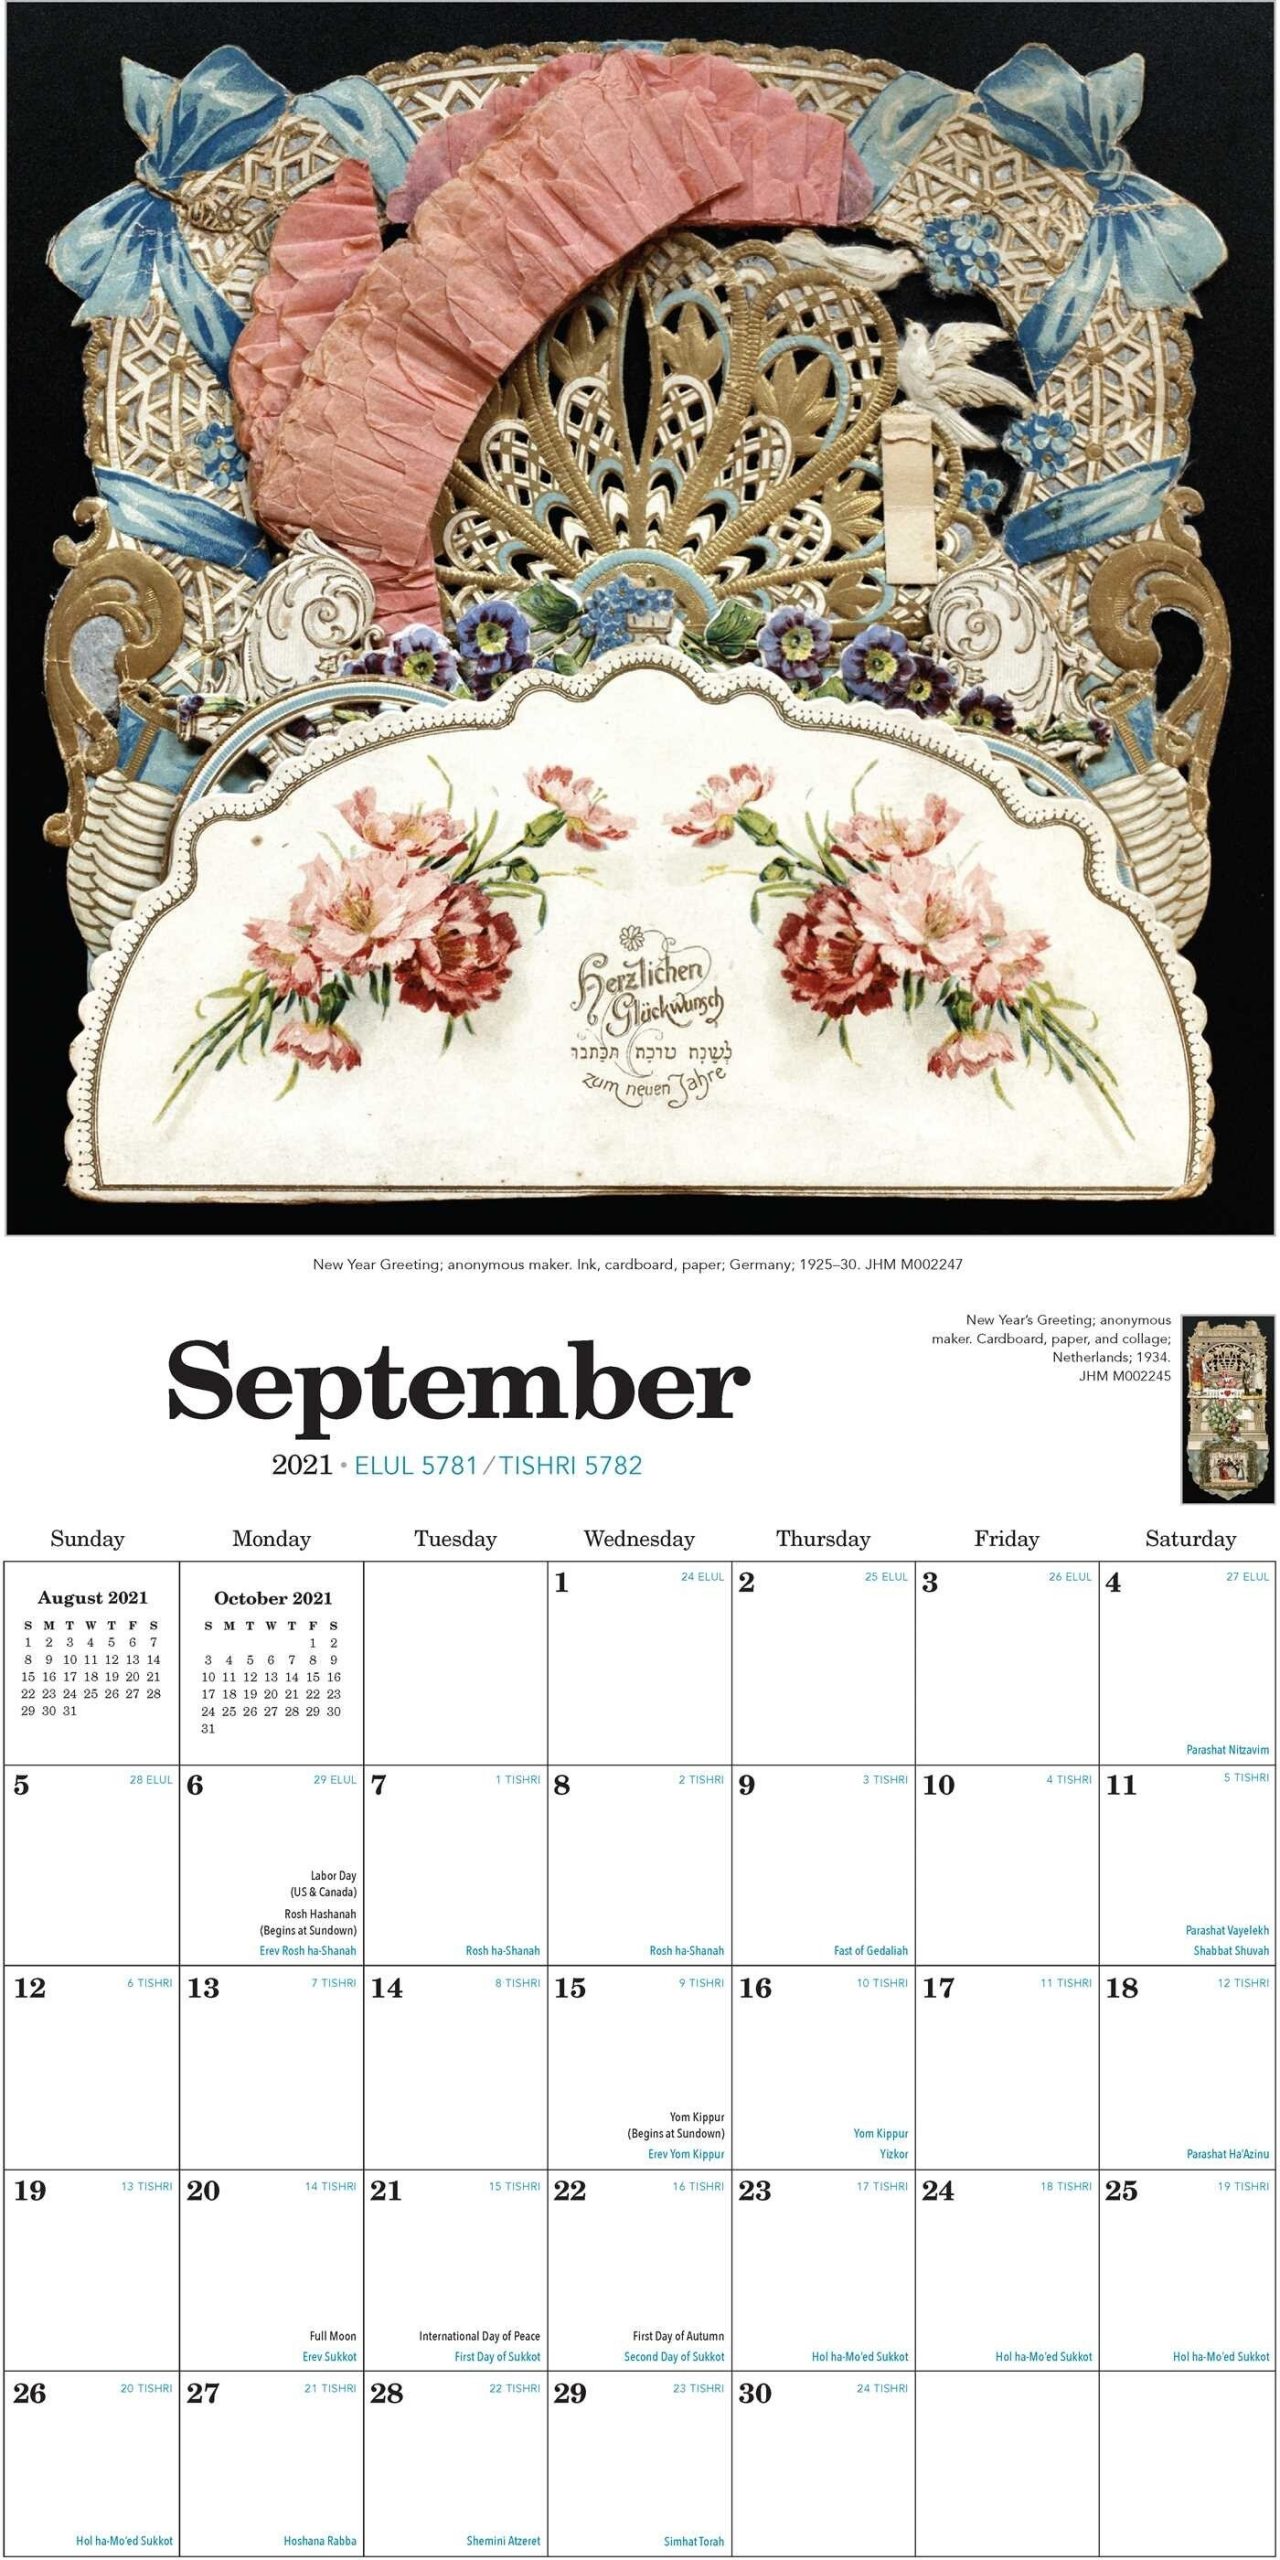 The 2021 Jewish Calendar 16-Month Wall Calendar - Book-Jewish Calendar For October 2021